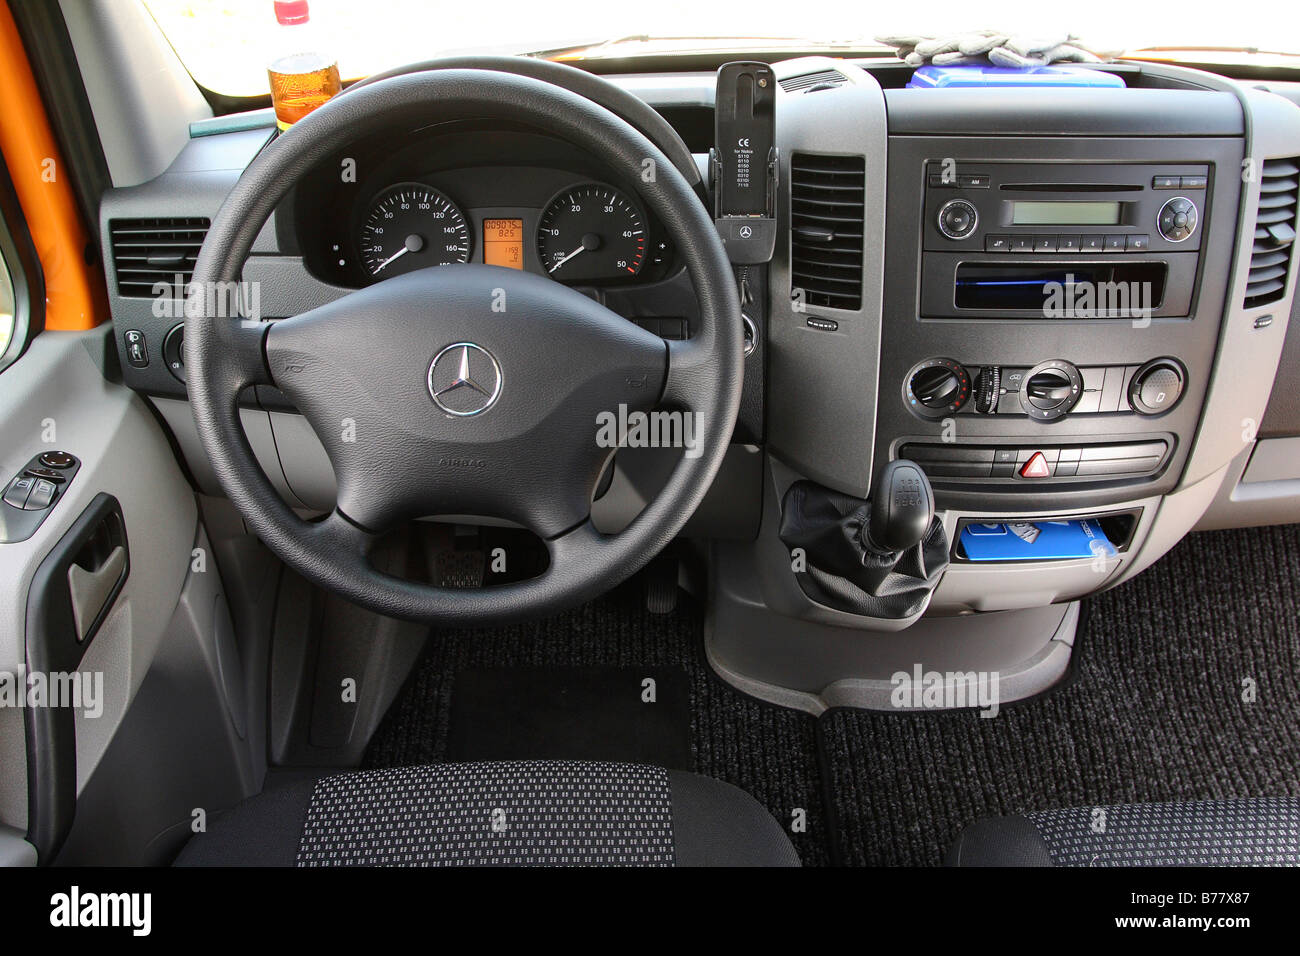 Mercedes Sprinter 311 CDI, cockpit Stock Photo - Alamy